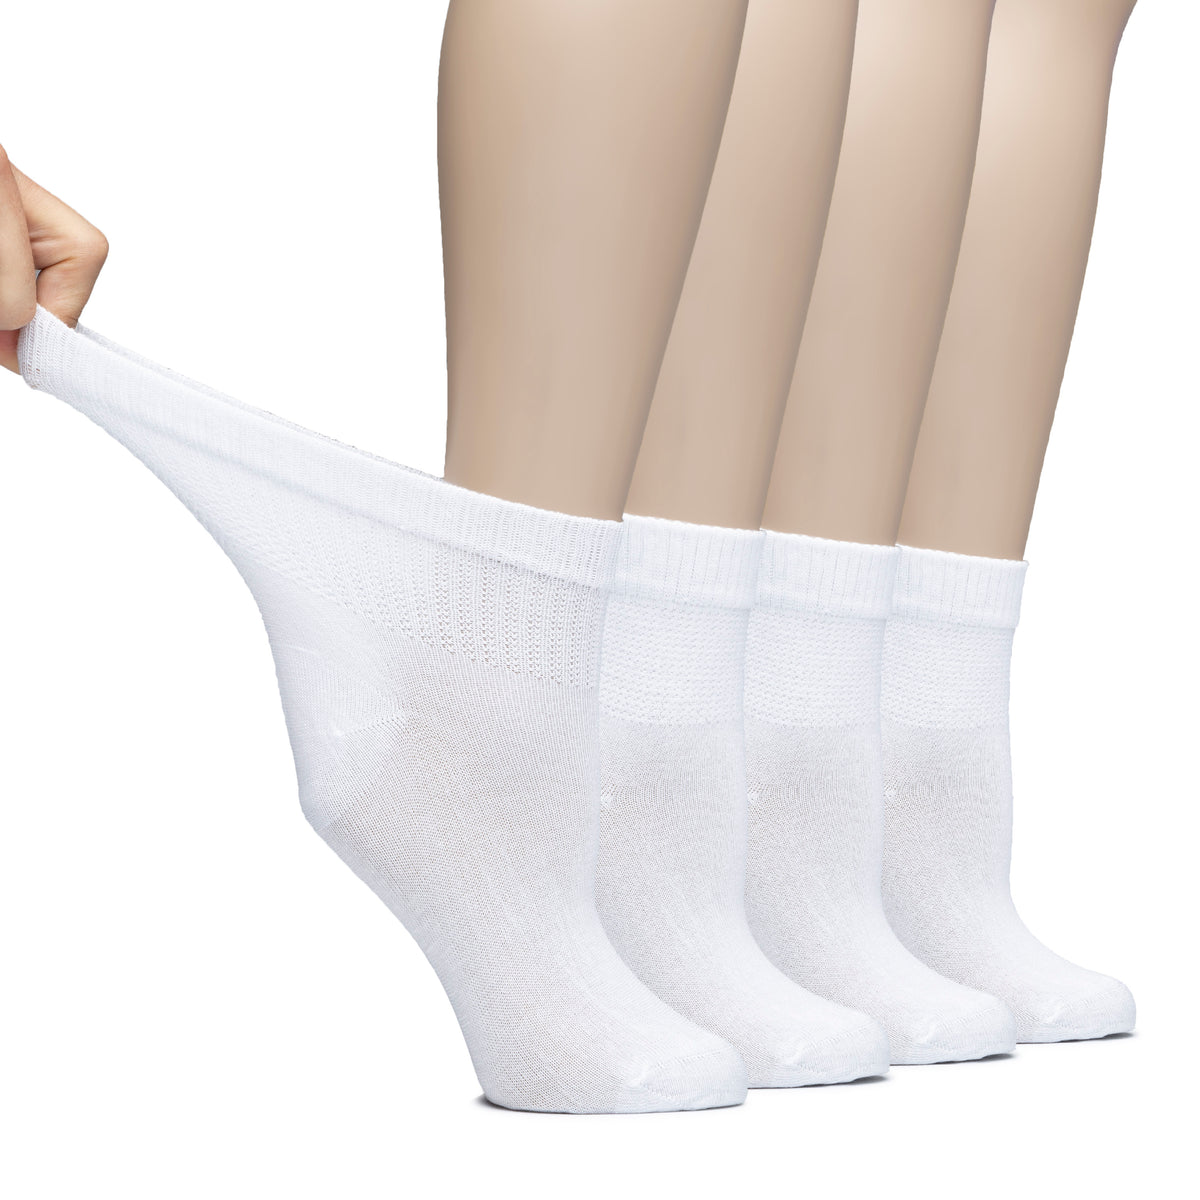 Hugh Ugoli Lightweight Women's Diabetic Ankle Socks Bamboo Thin Socks Seamless Toe and Non-Binding Top, 4 Pairs, , Shoe Size: 6-9/10-12 | Shoe Size: 6-9 | Yellow